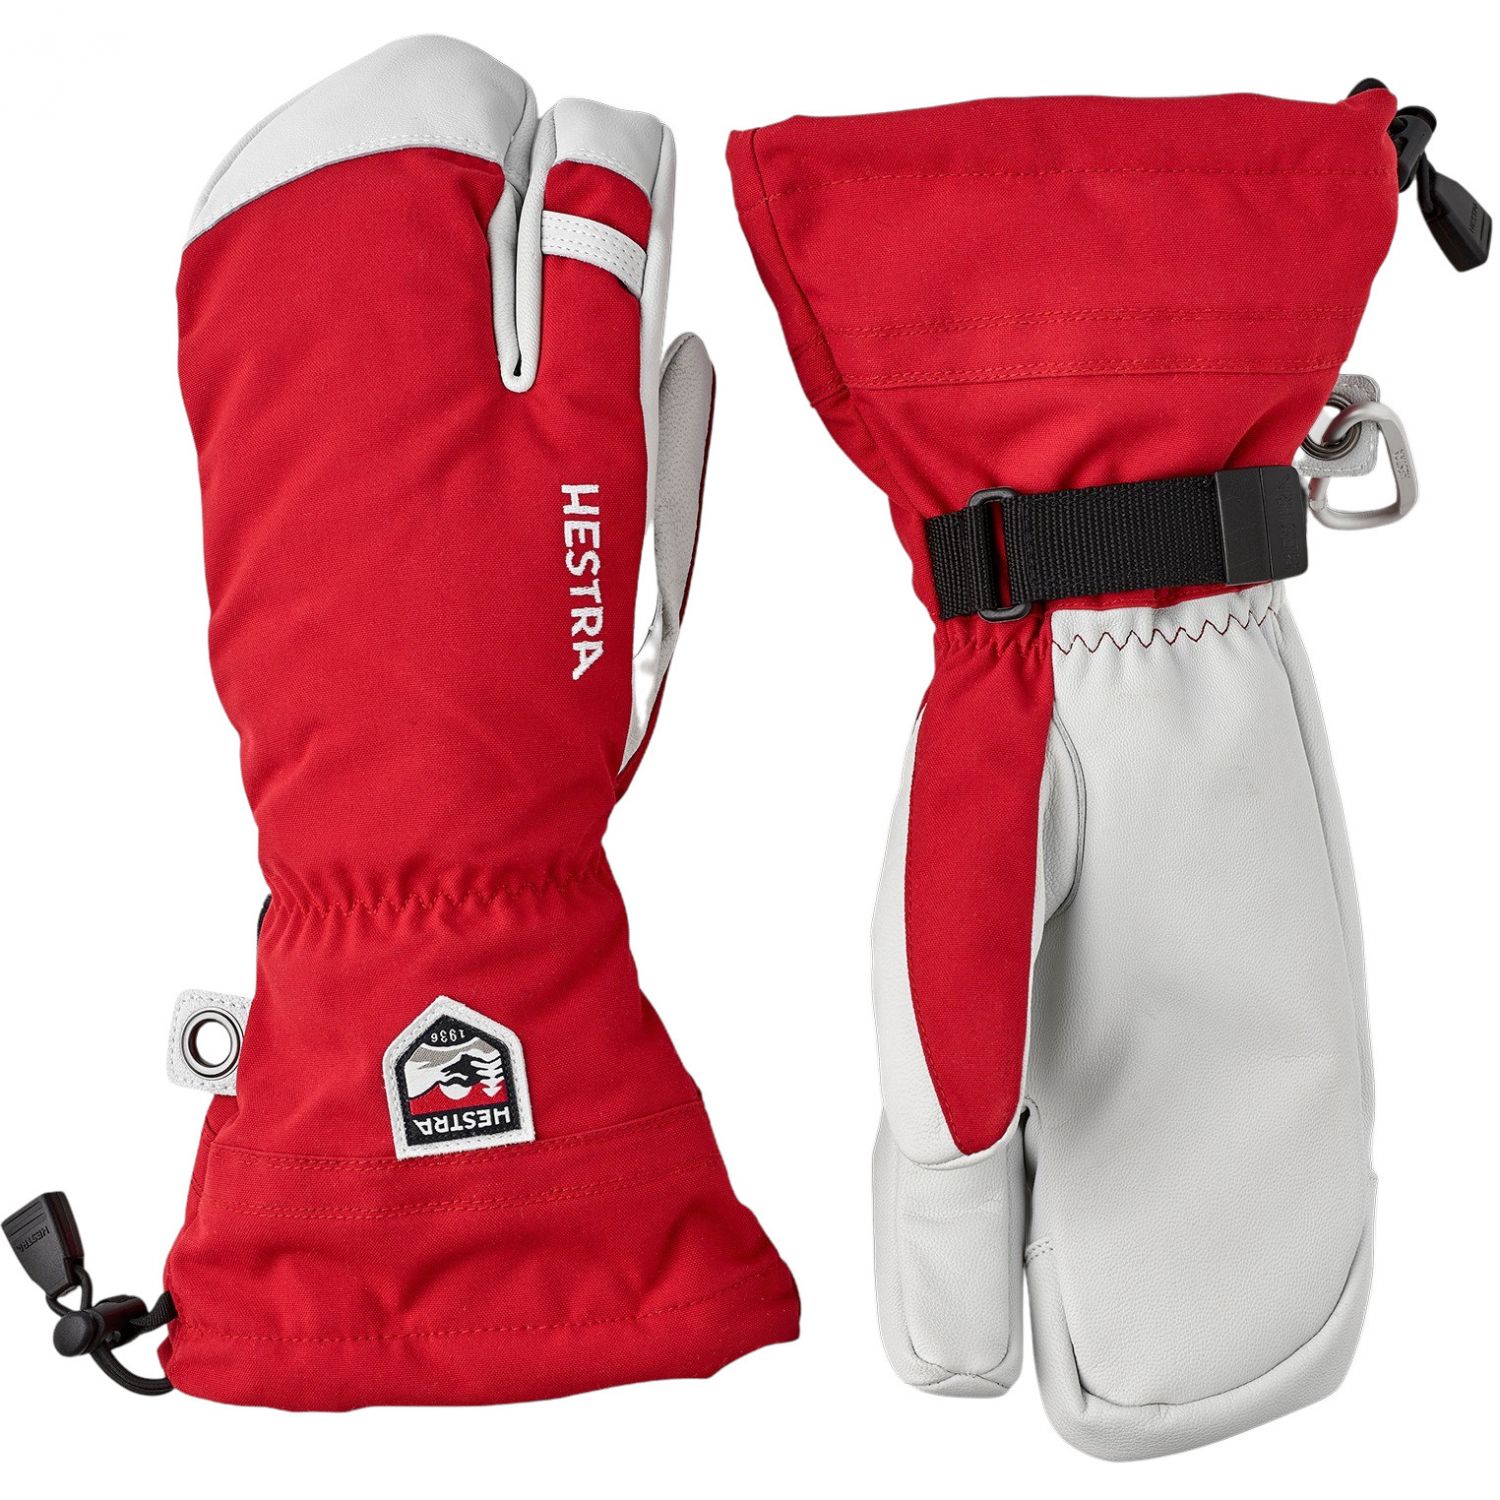 Hestra Army Leather Heli Ski, 3-finger ski gloves, red